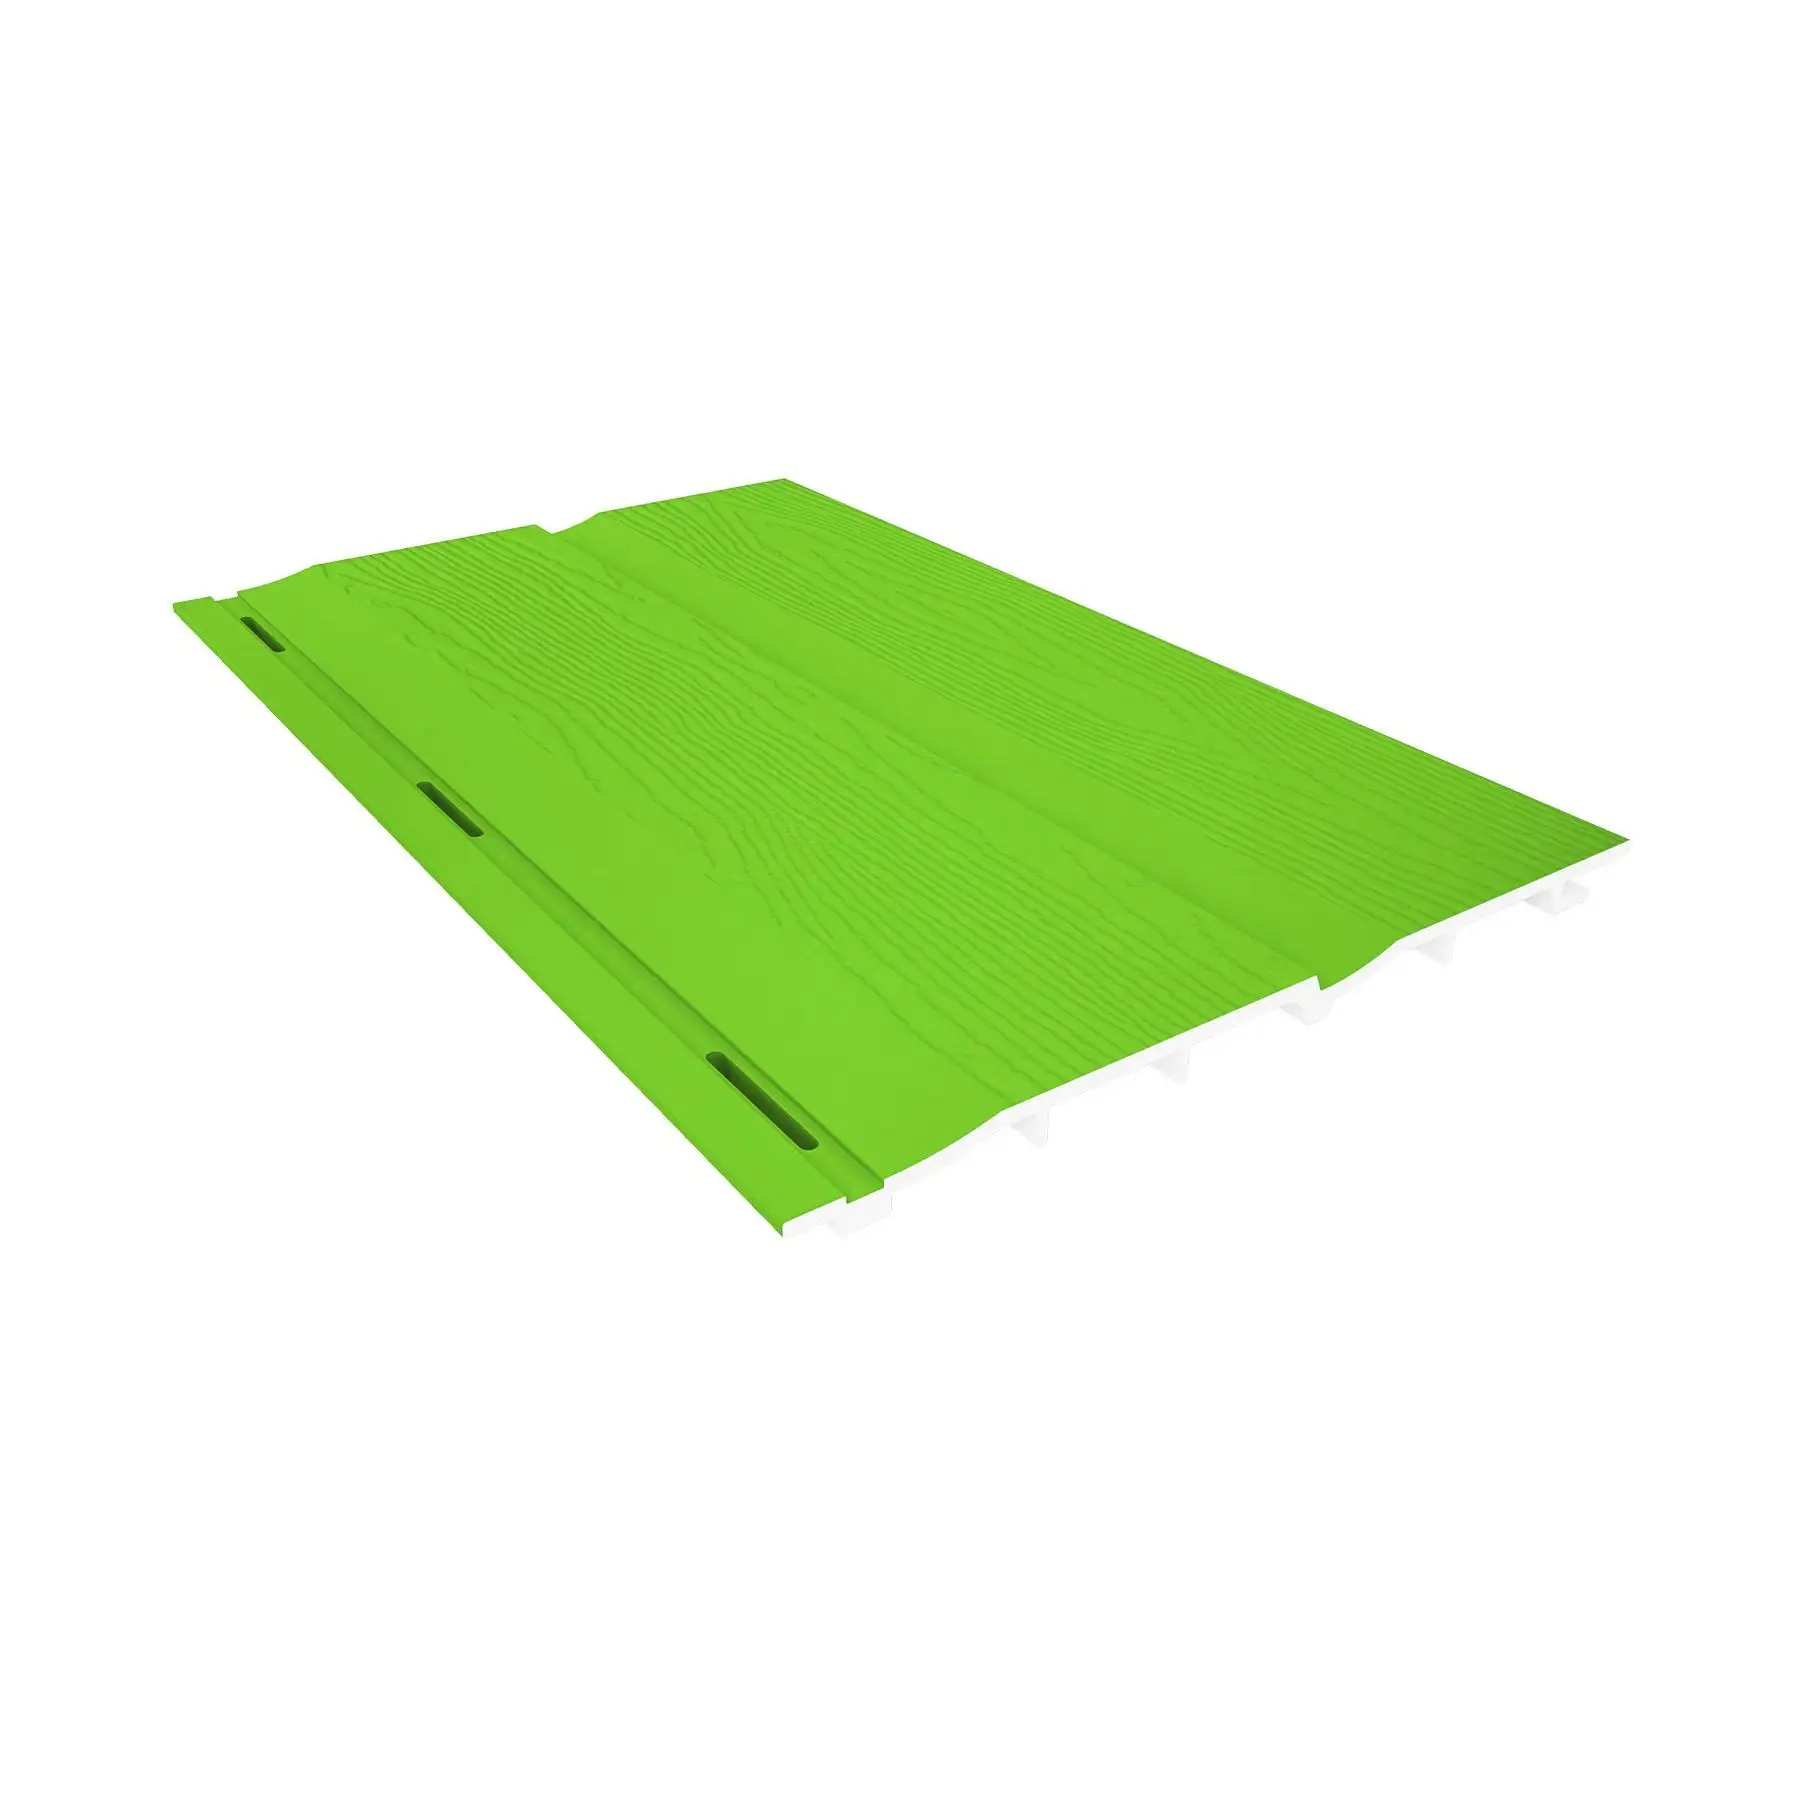 Vibrant ISOMUR Matt Outdoor Covering - Fluorescent Green Wood Sandwich Panel | 300cm - Bold & Innovative Cladding